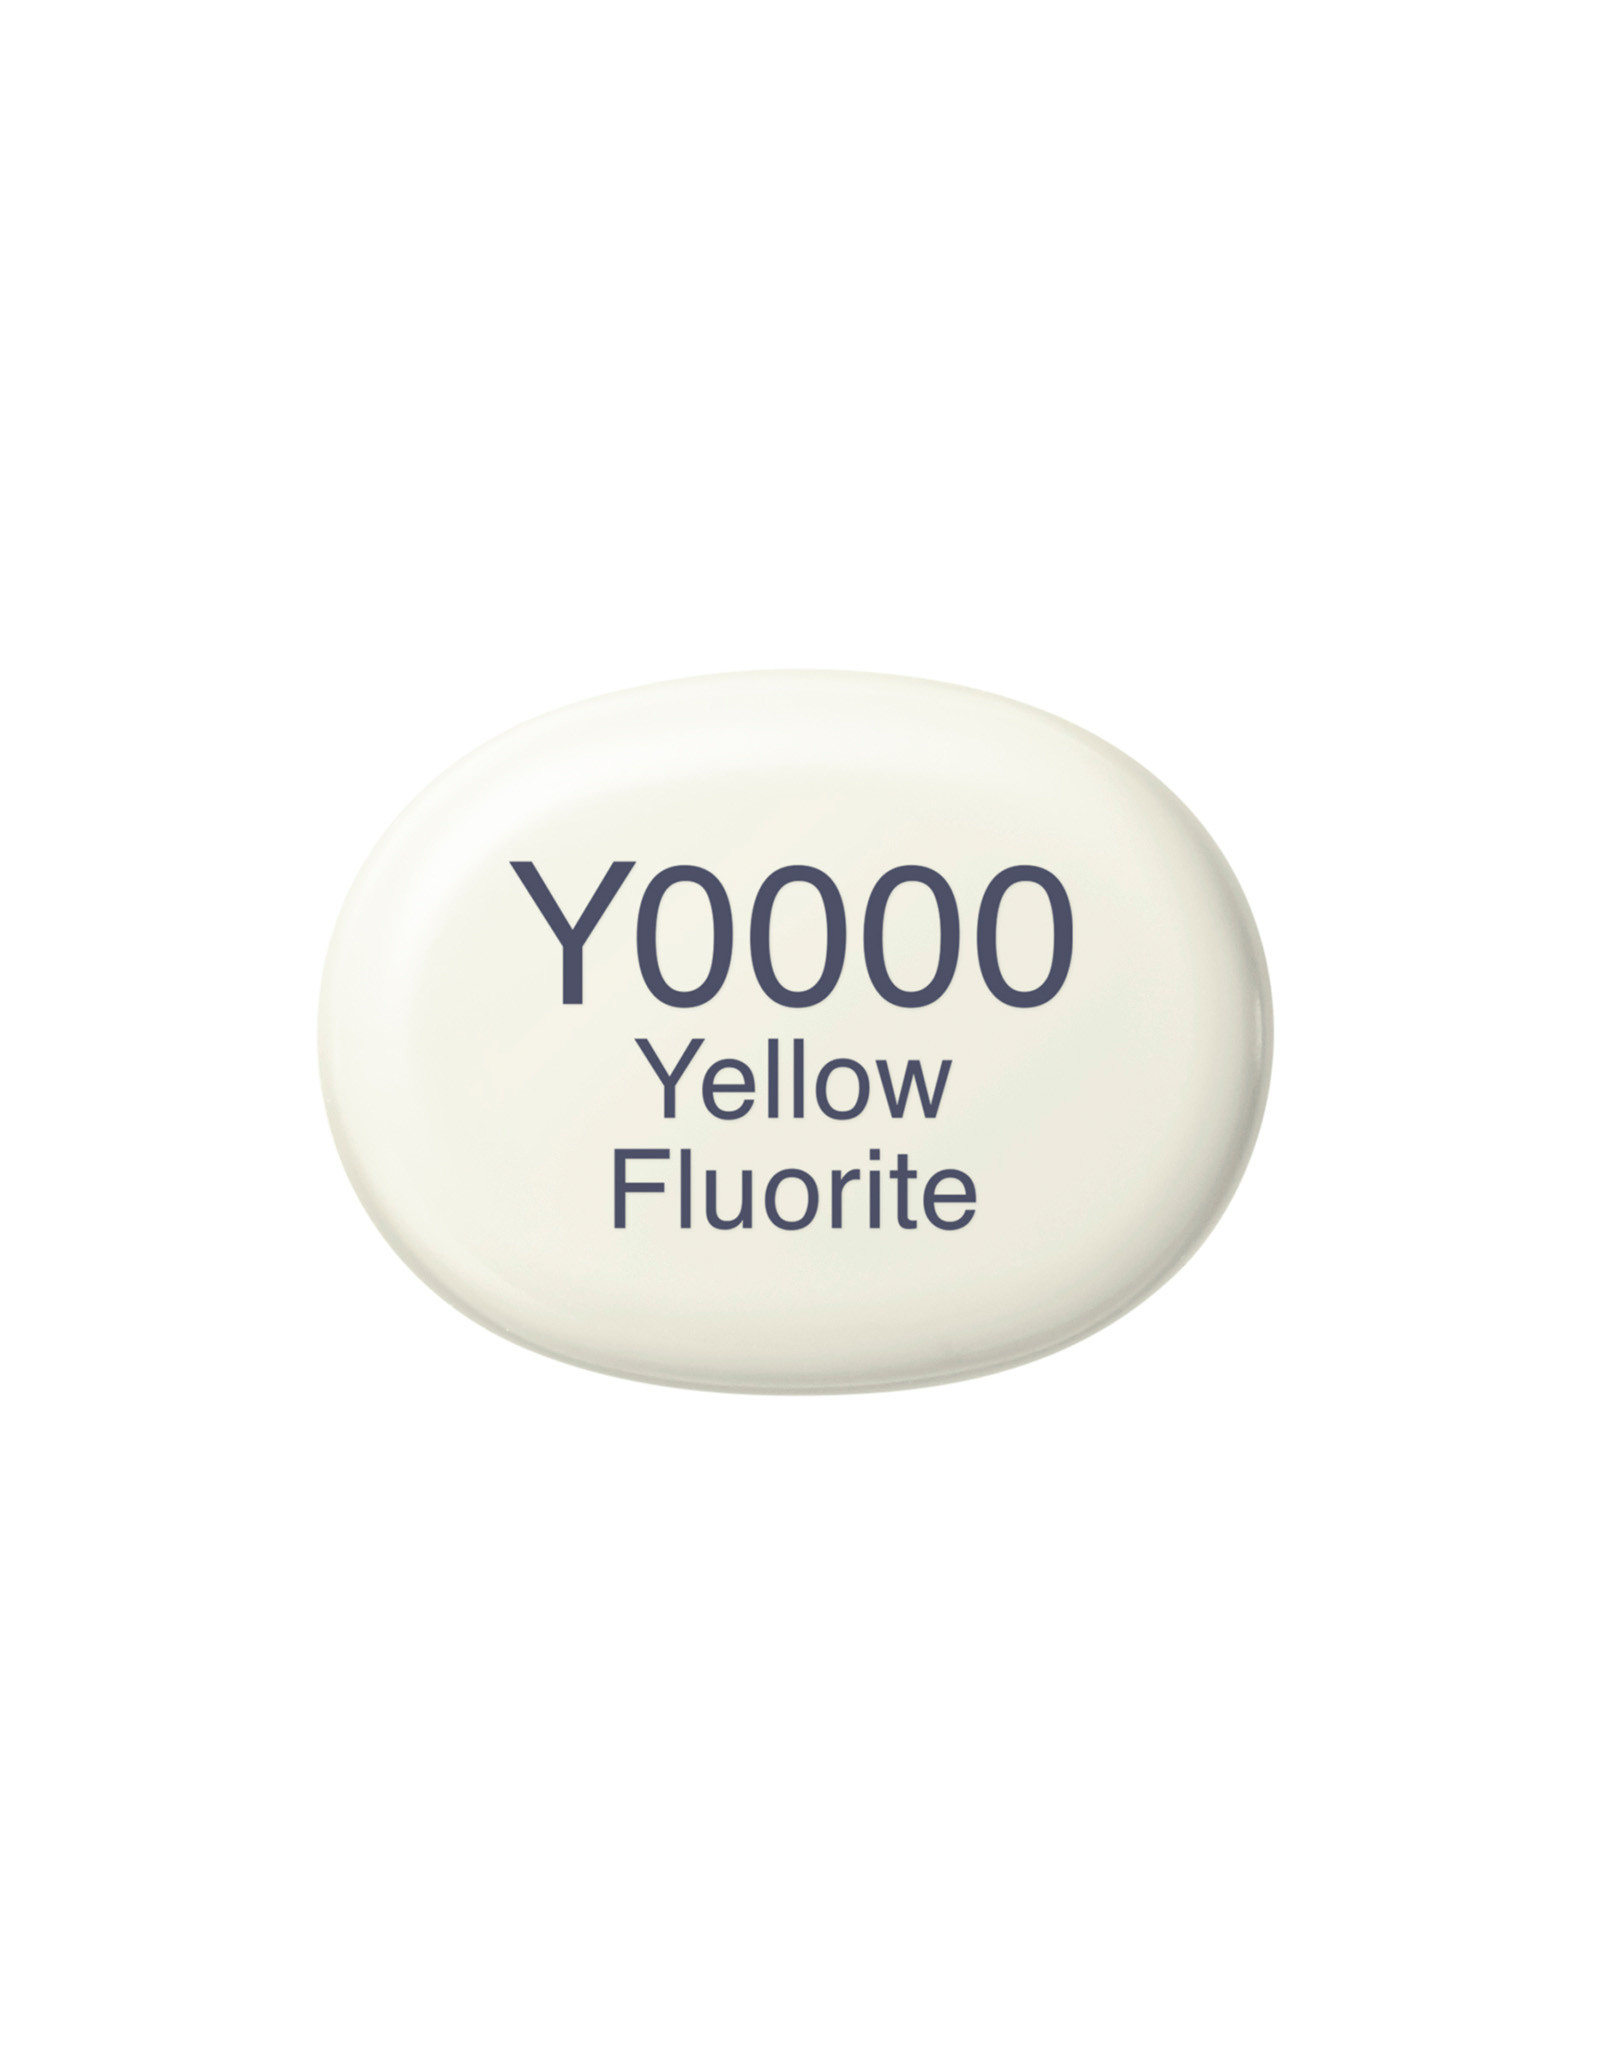 COPIC COPIC Sketch Marker Y0000 Yellow Fluorite